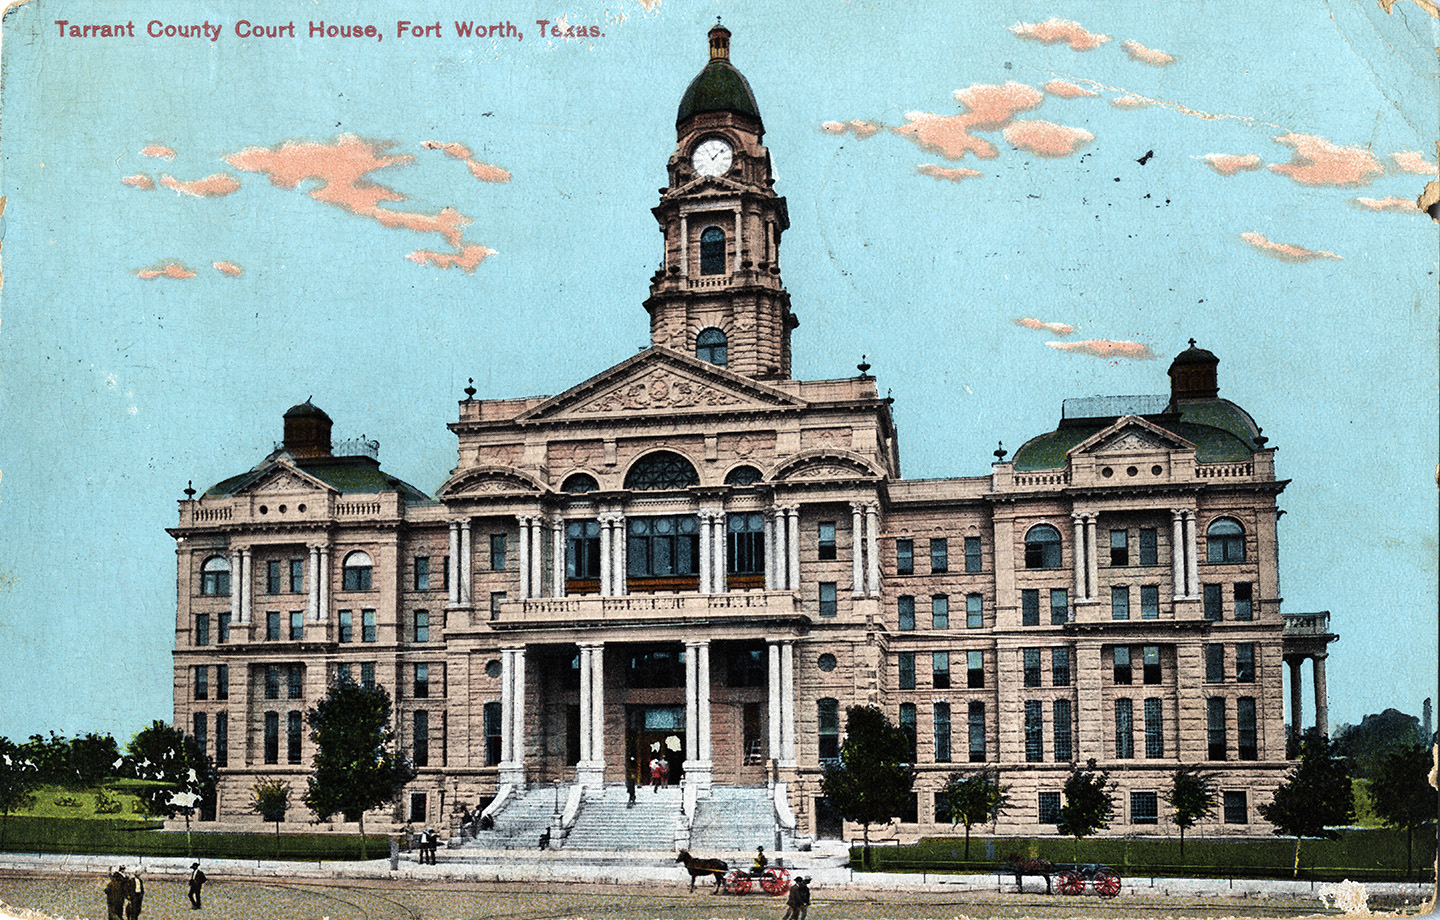 Fort Worth Municipal Court